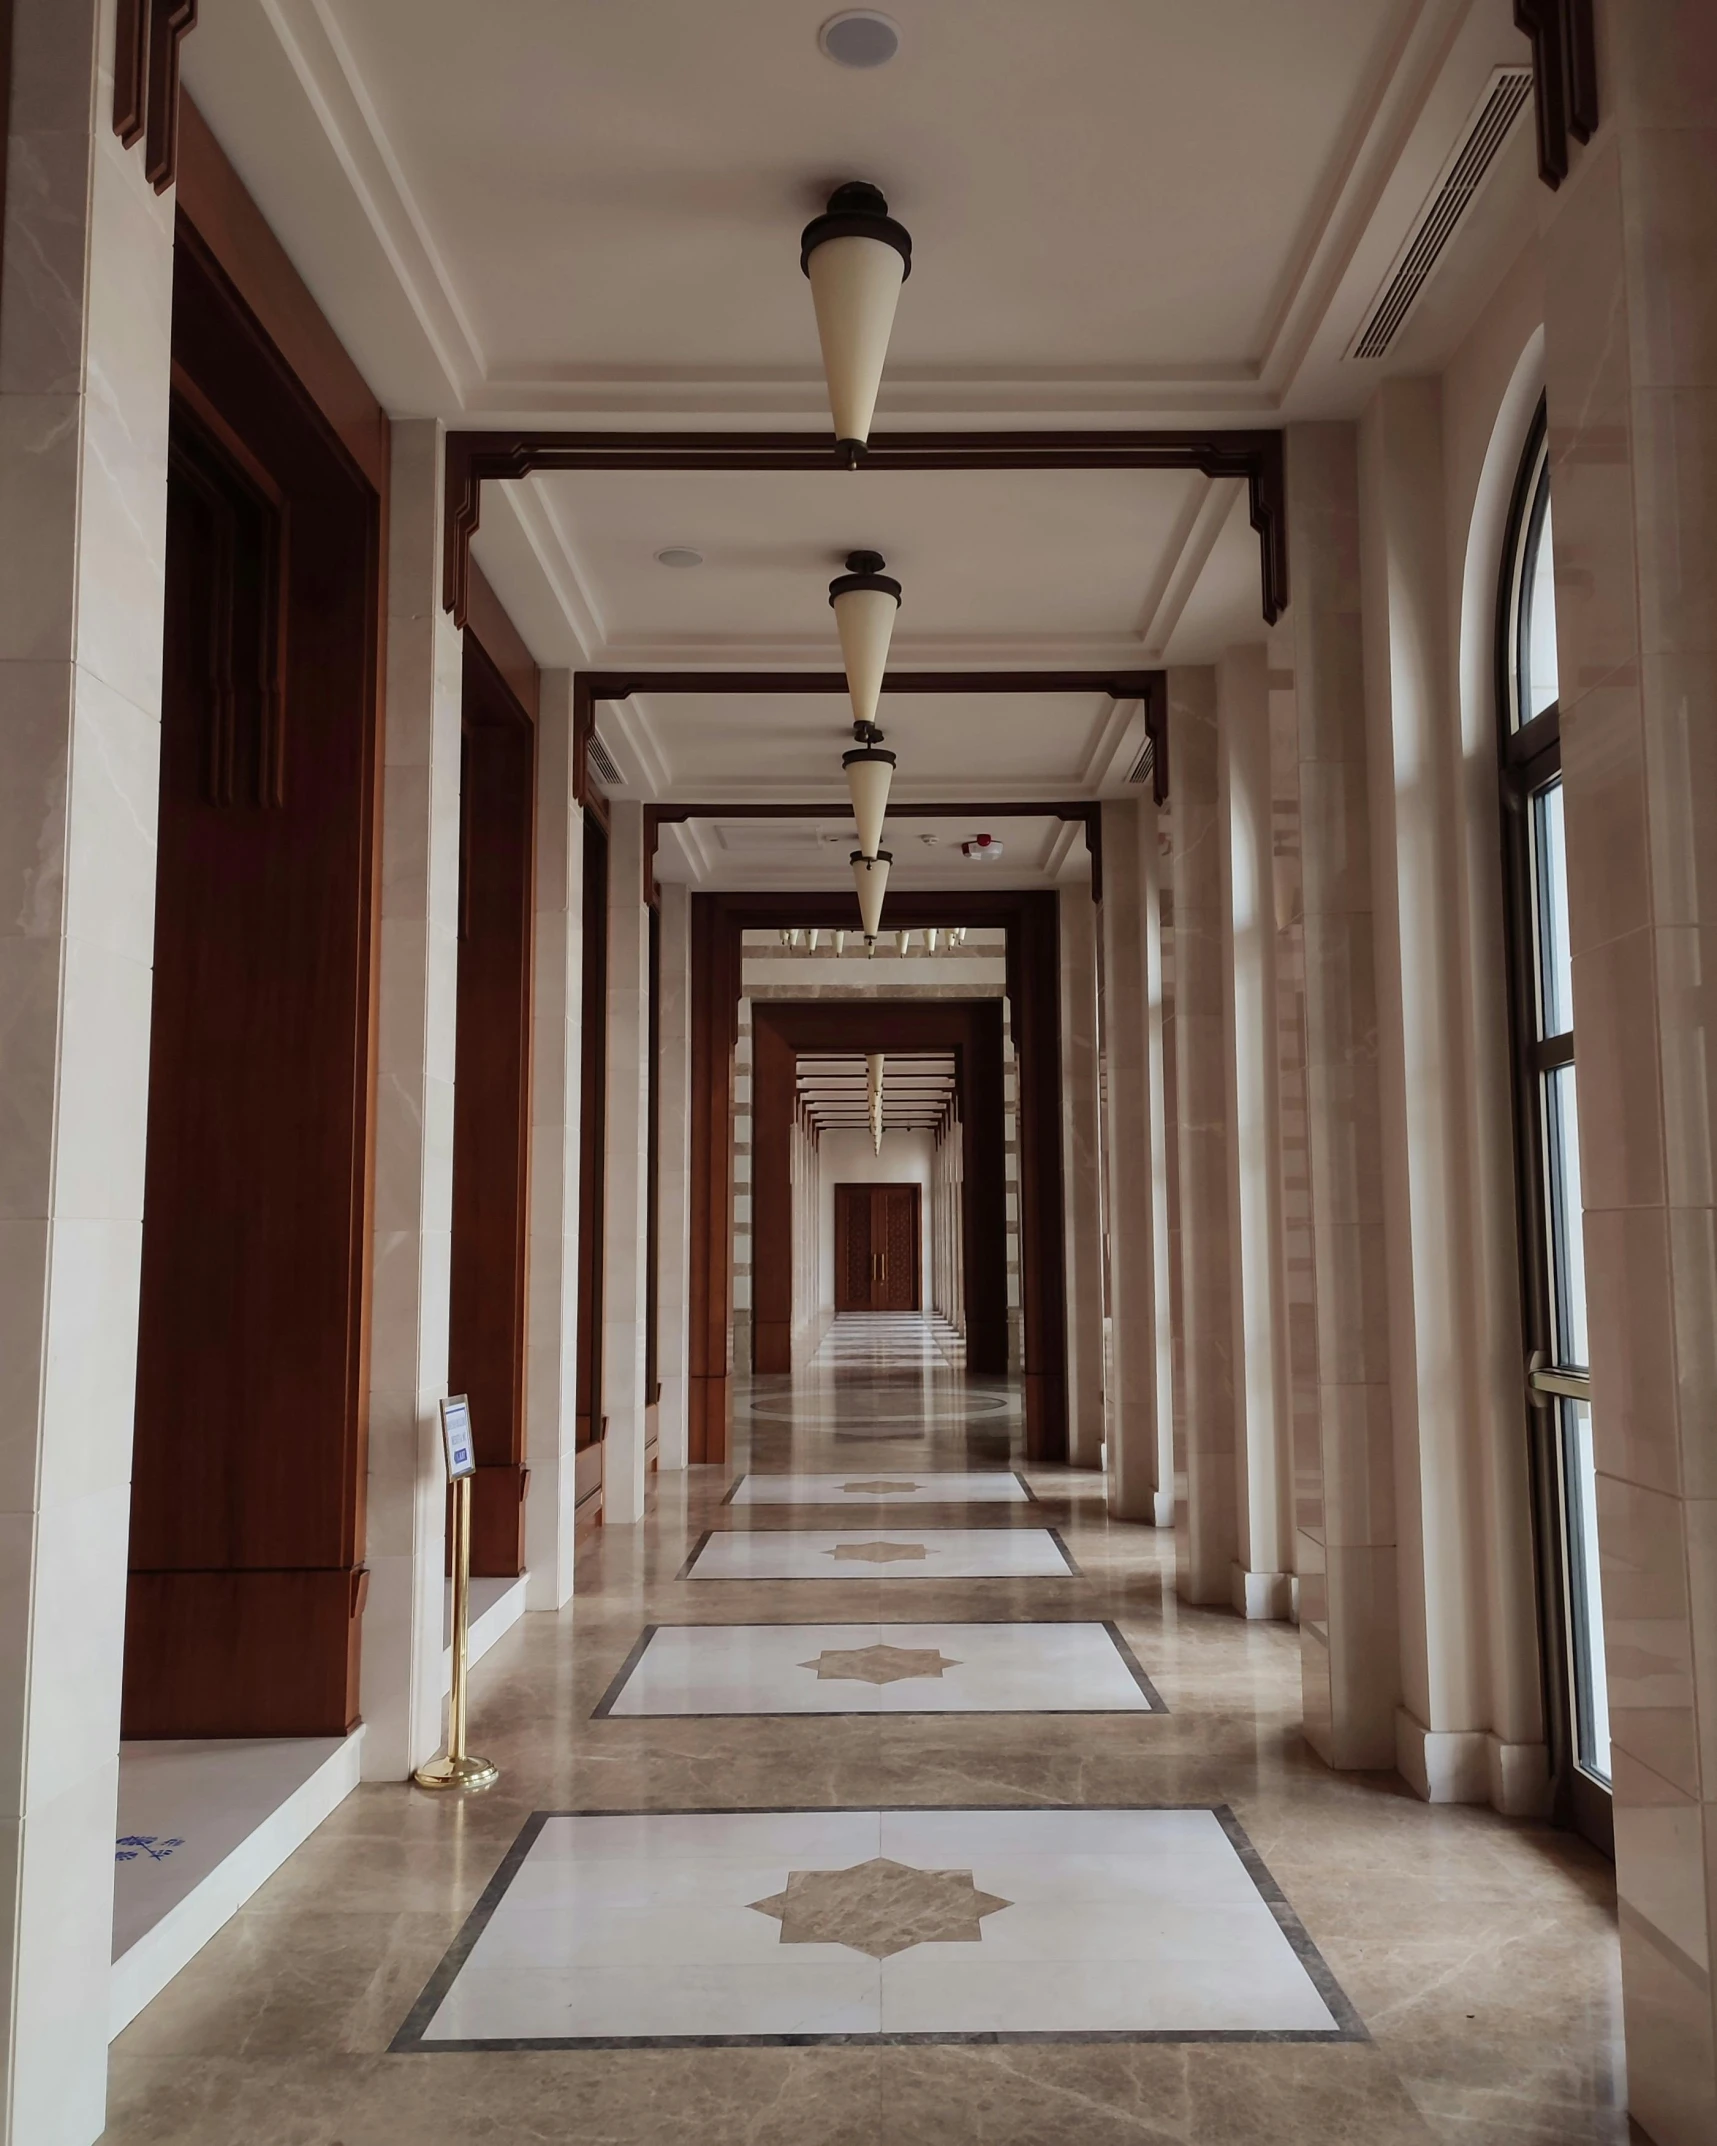 the hallway is lined with fancy floor tiles